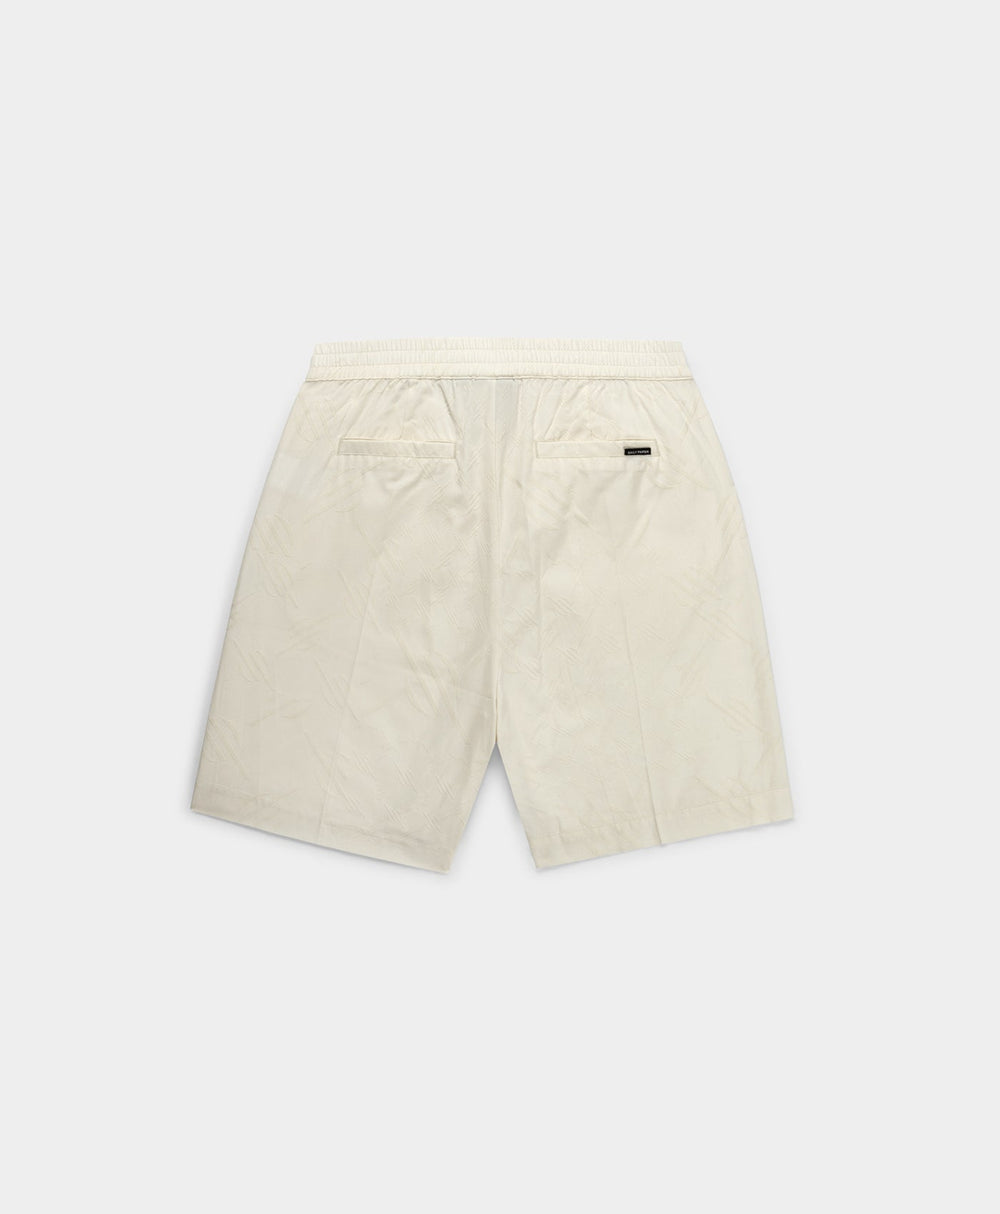 DP - Egret White Piam Shorts - Packshot - Rear